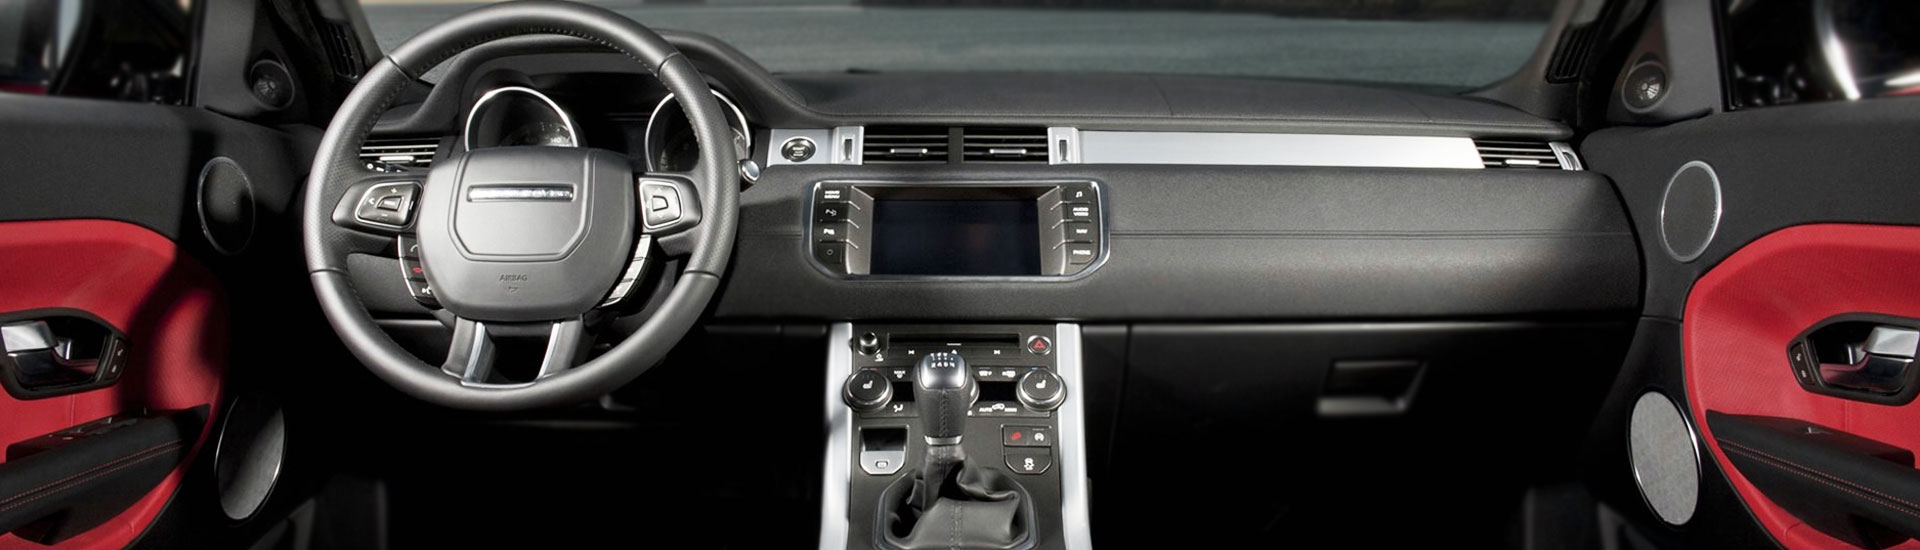 Land Rover Range Rover Evoque Custom Dash Kits